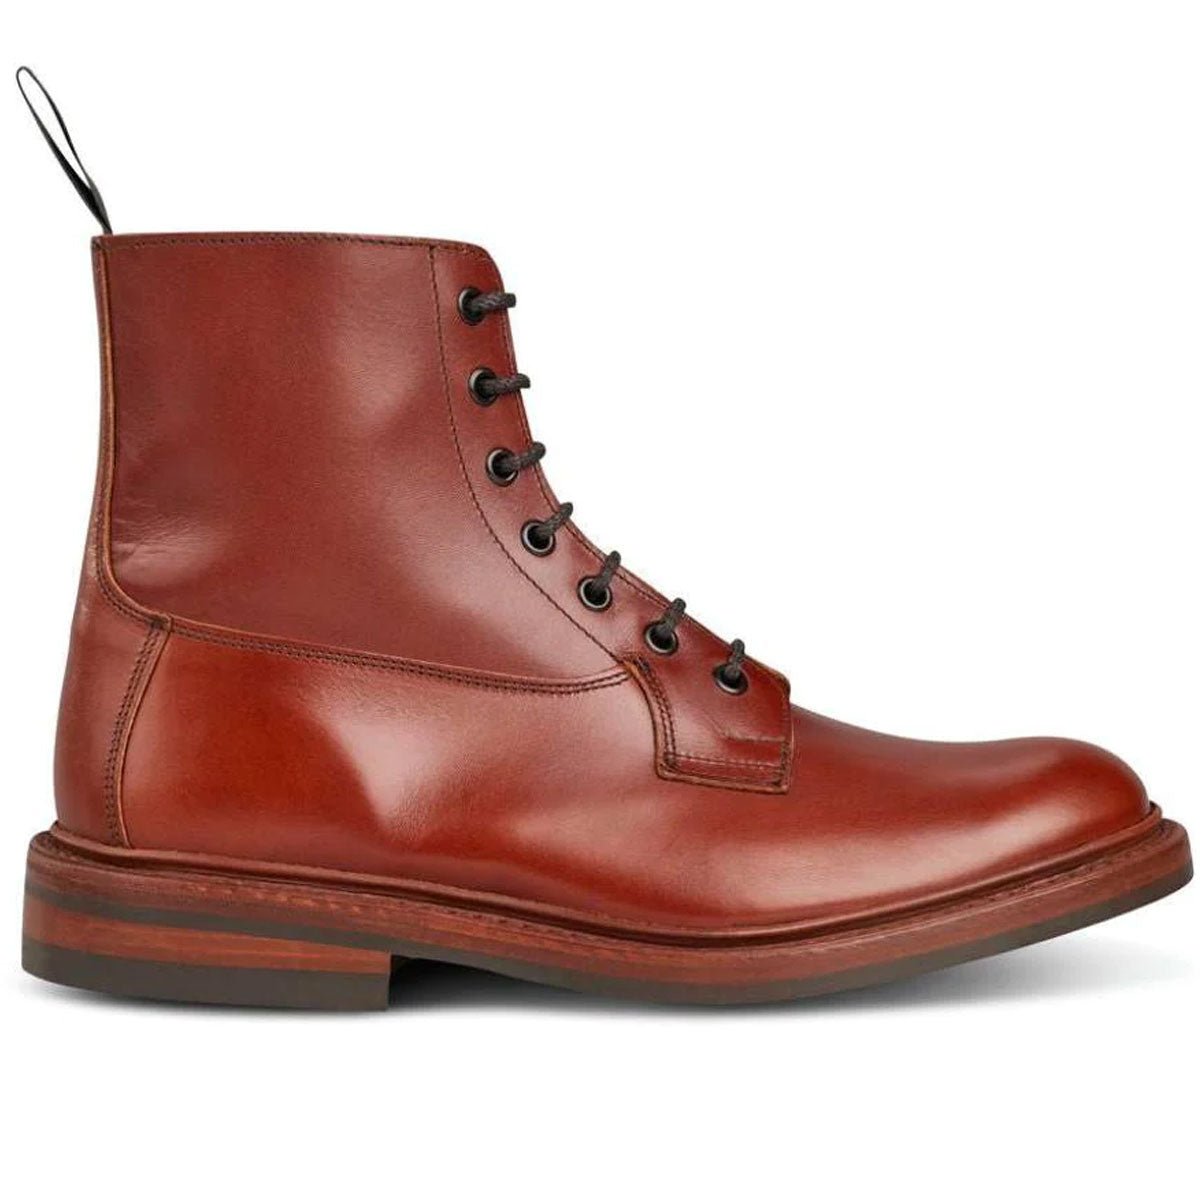 TRICKER'S Burford Boots - Mens Dainite or Leather Sole - Marron Antique